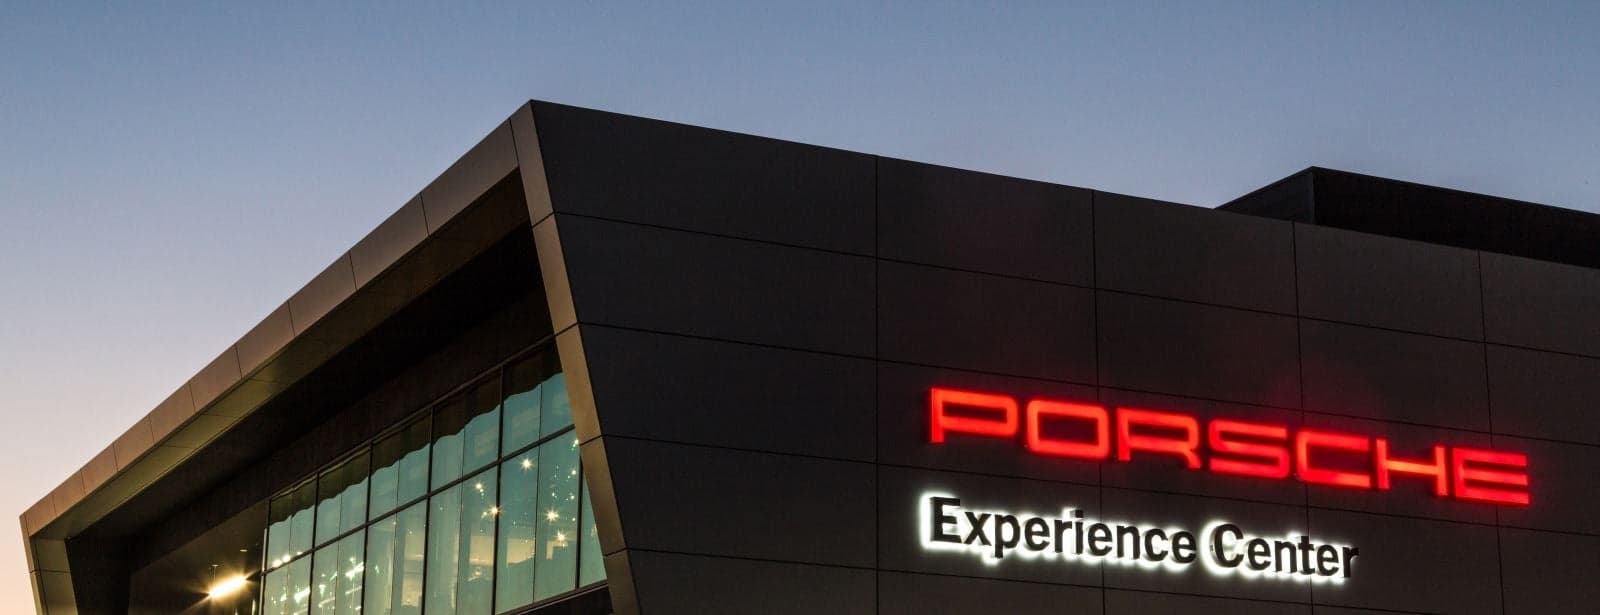 Porsche’s Los Angeles Experience Center Is Now Open!